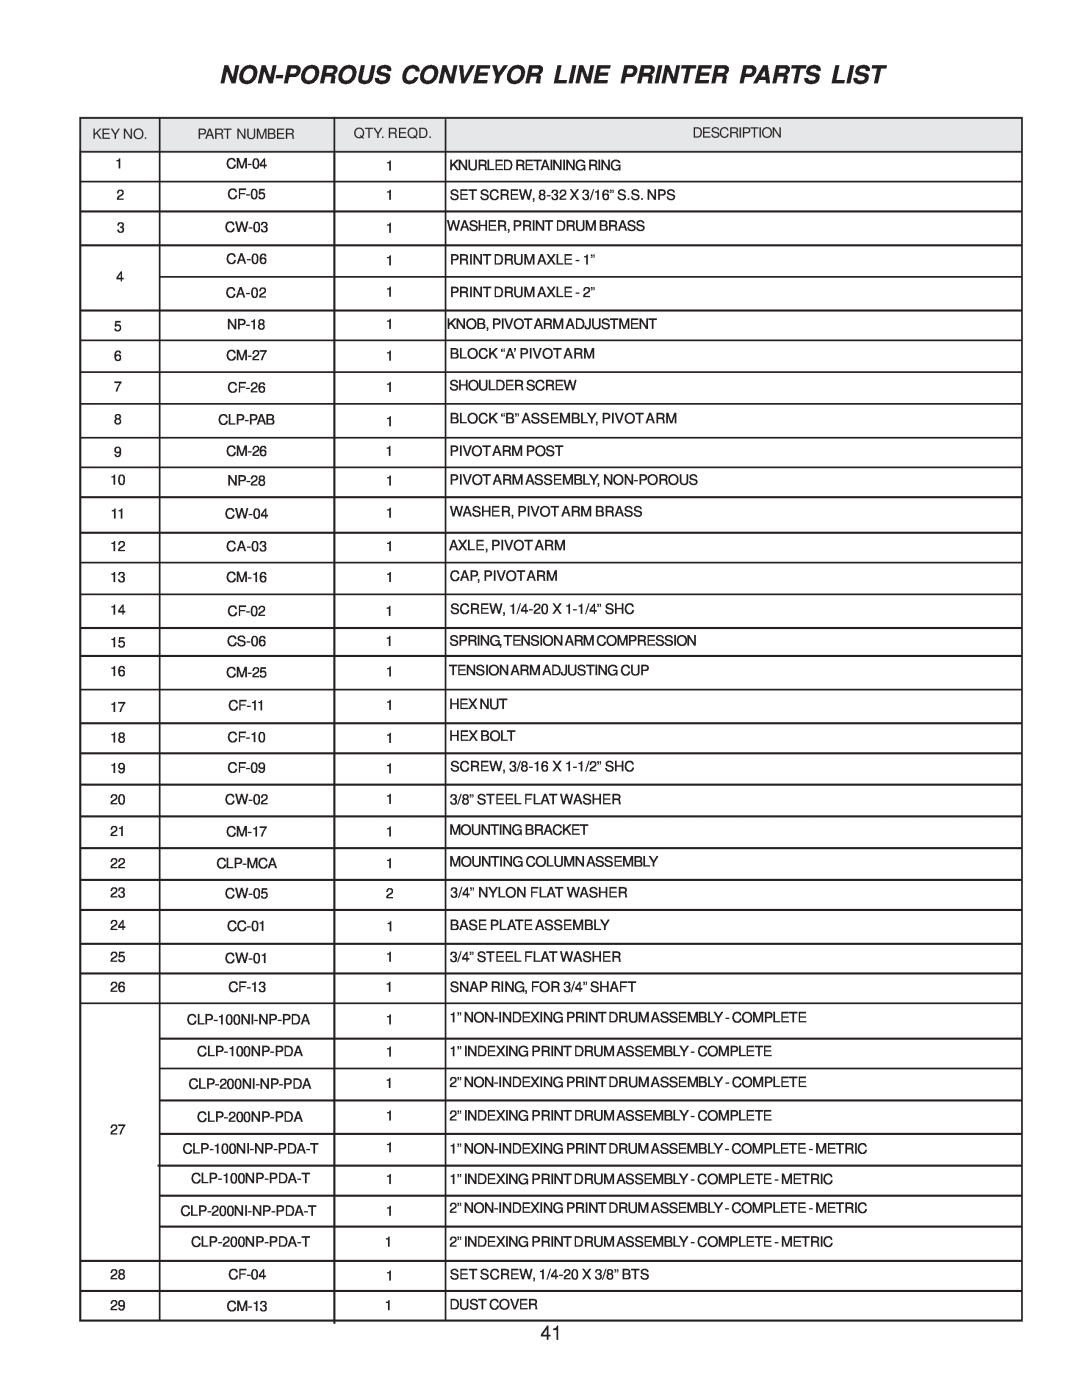 Universal Laser Systems CLP-100NI-NPRT manual Non-Porous Conveyor Line Printer Parts List, CF-11 